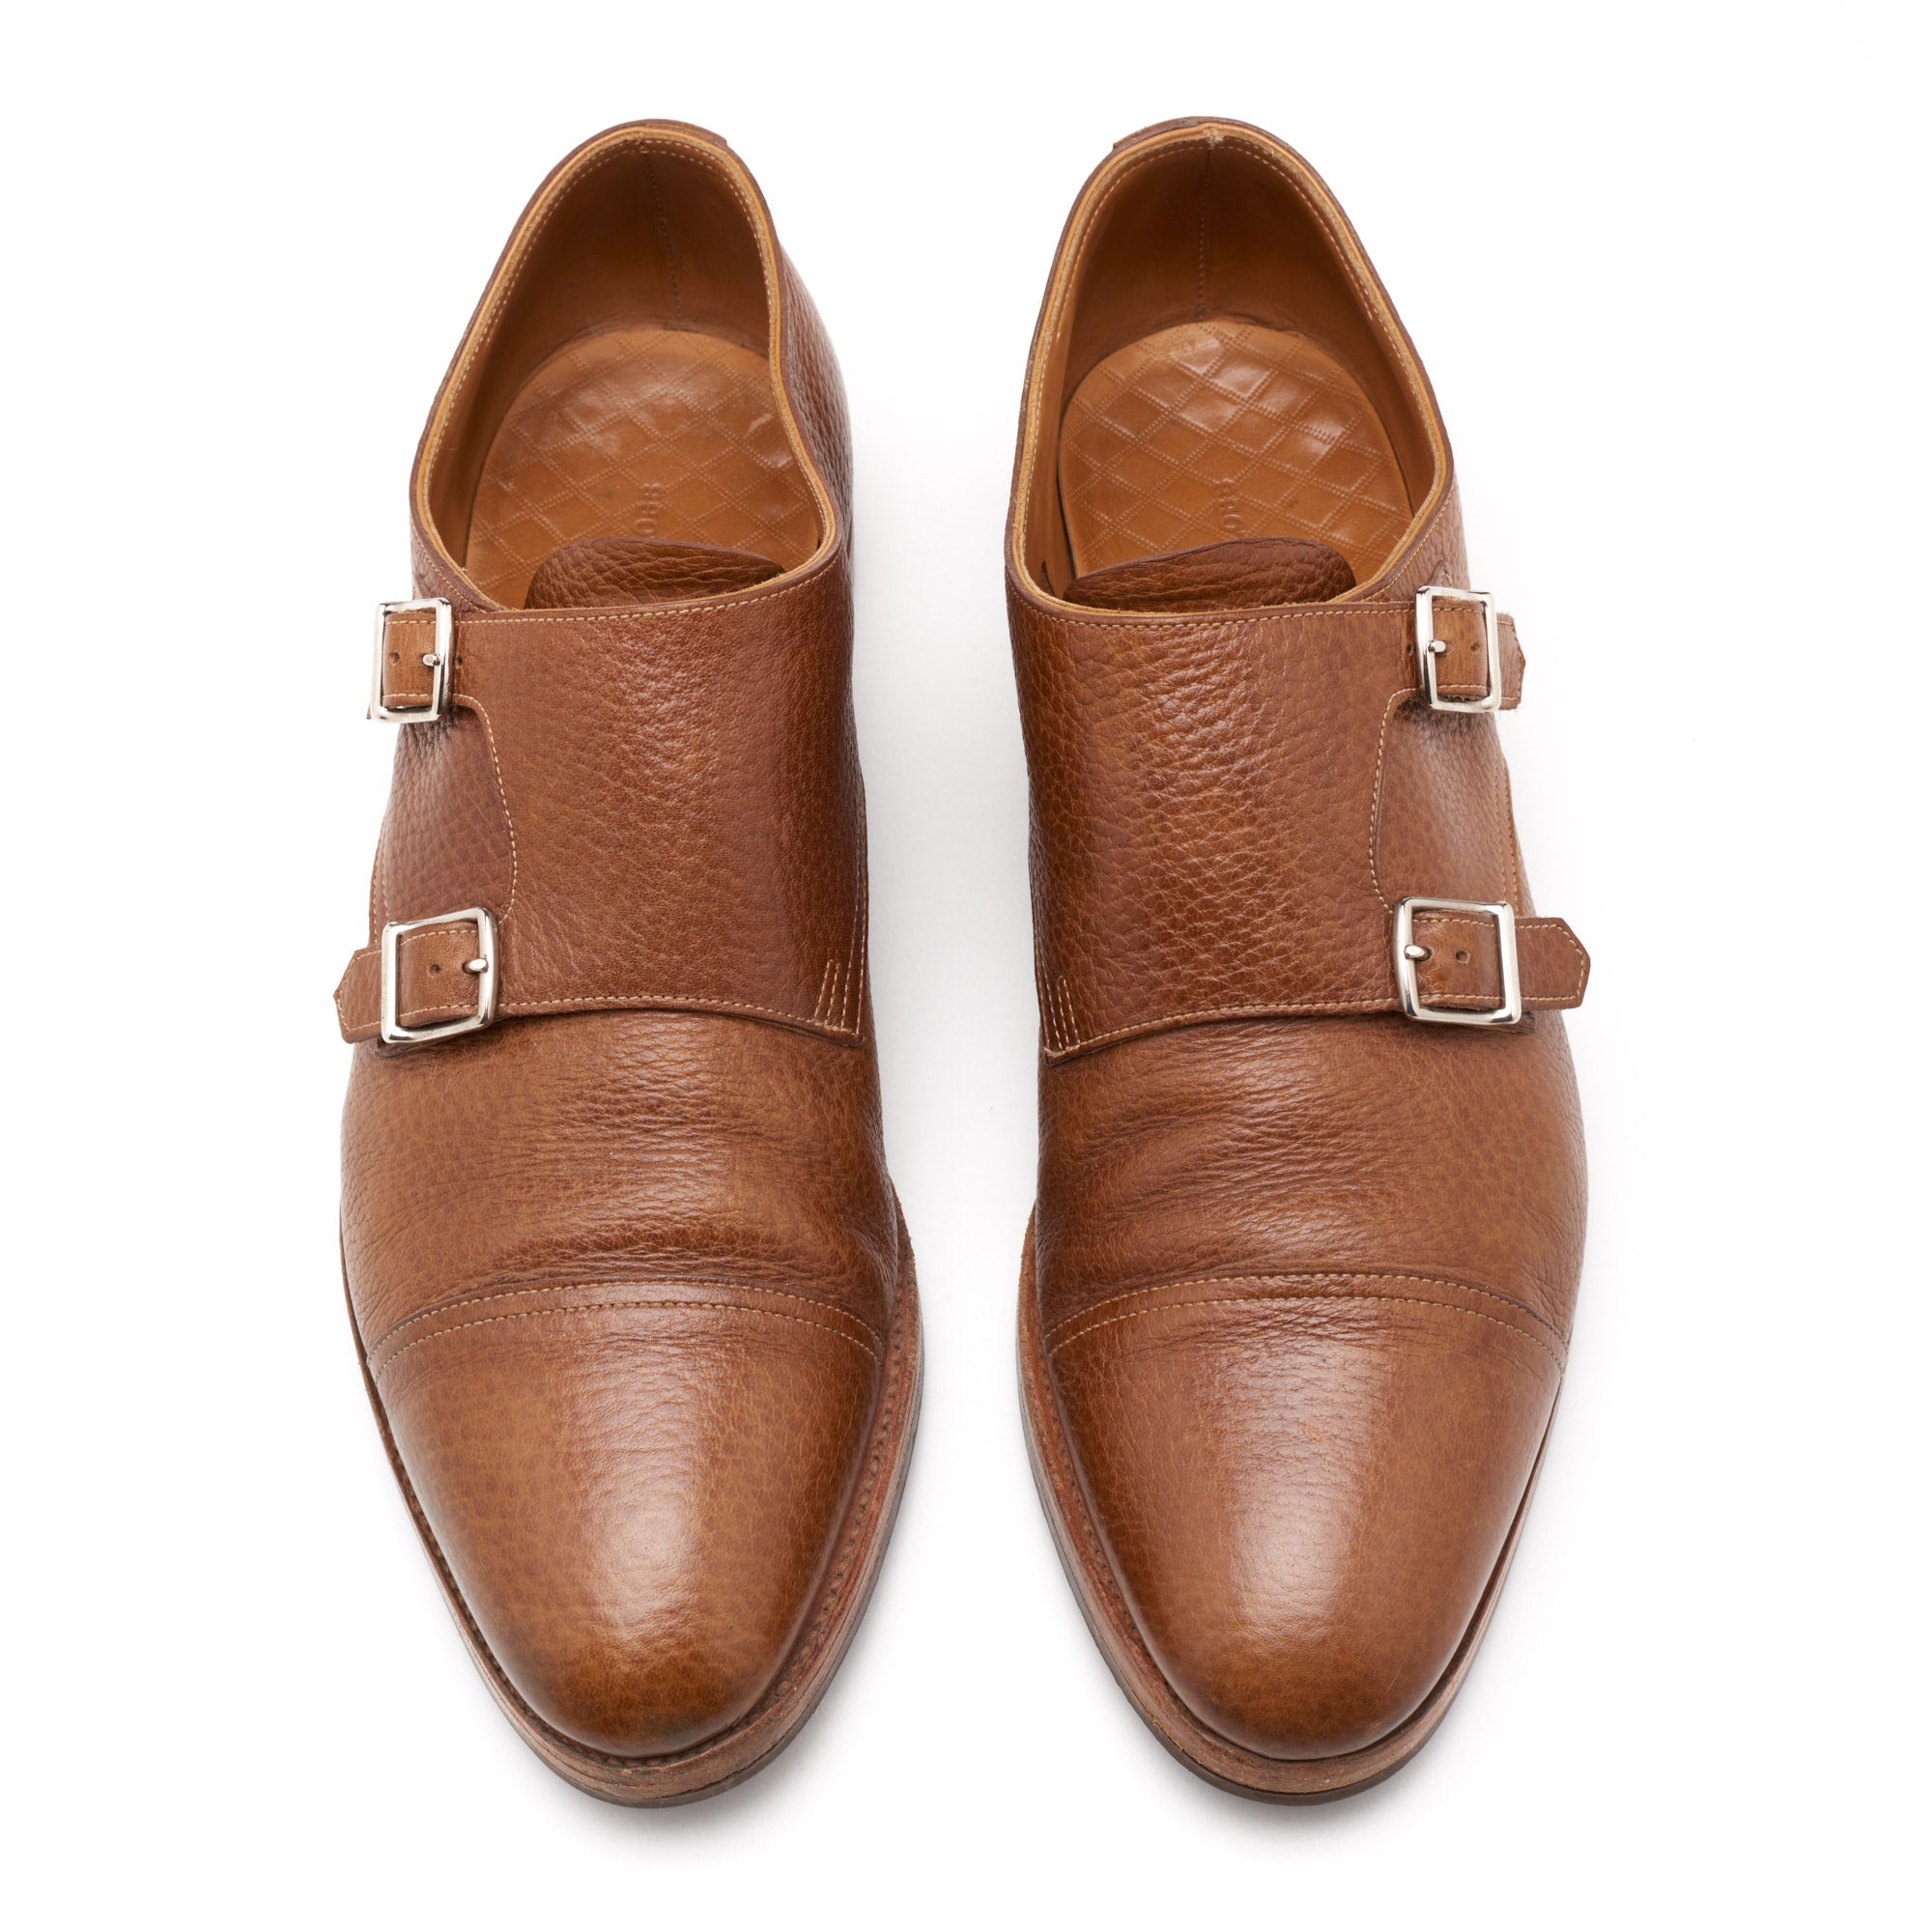 JOHN LOBB "William" Brown Leather Double Monk Shoes UK 8.5E US 9.5 Last 9795